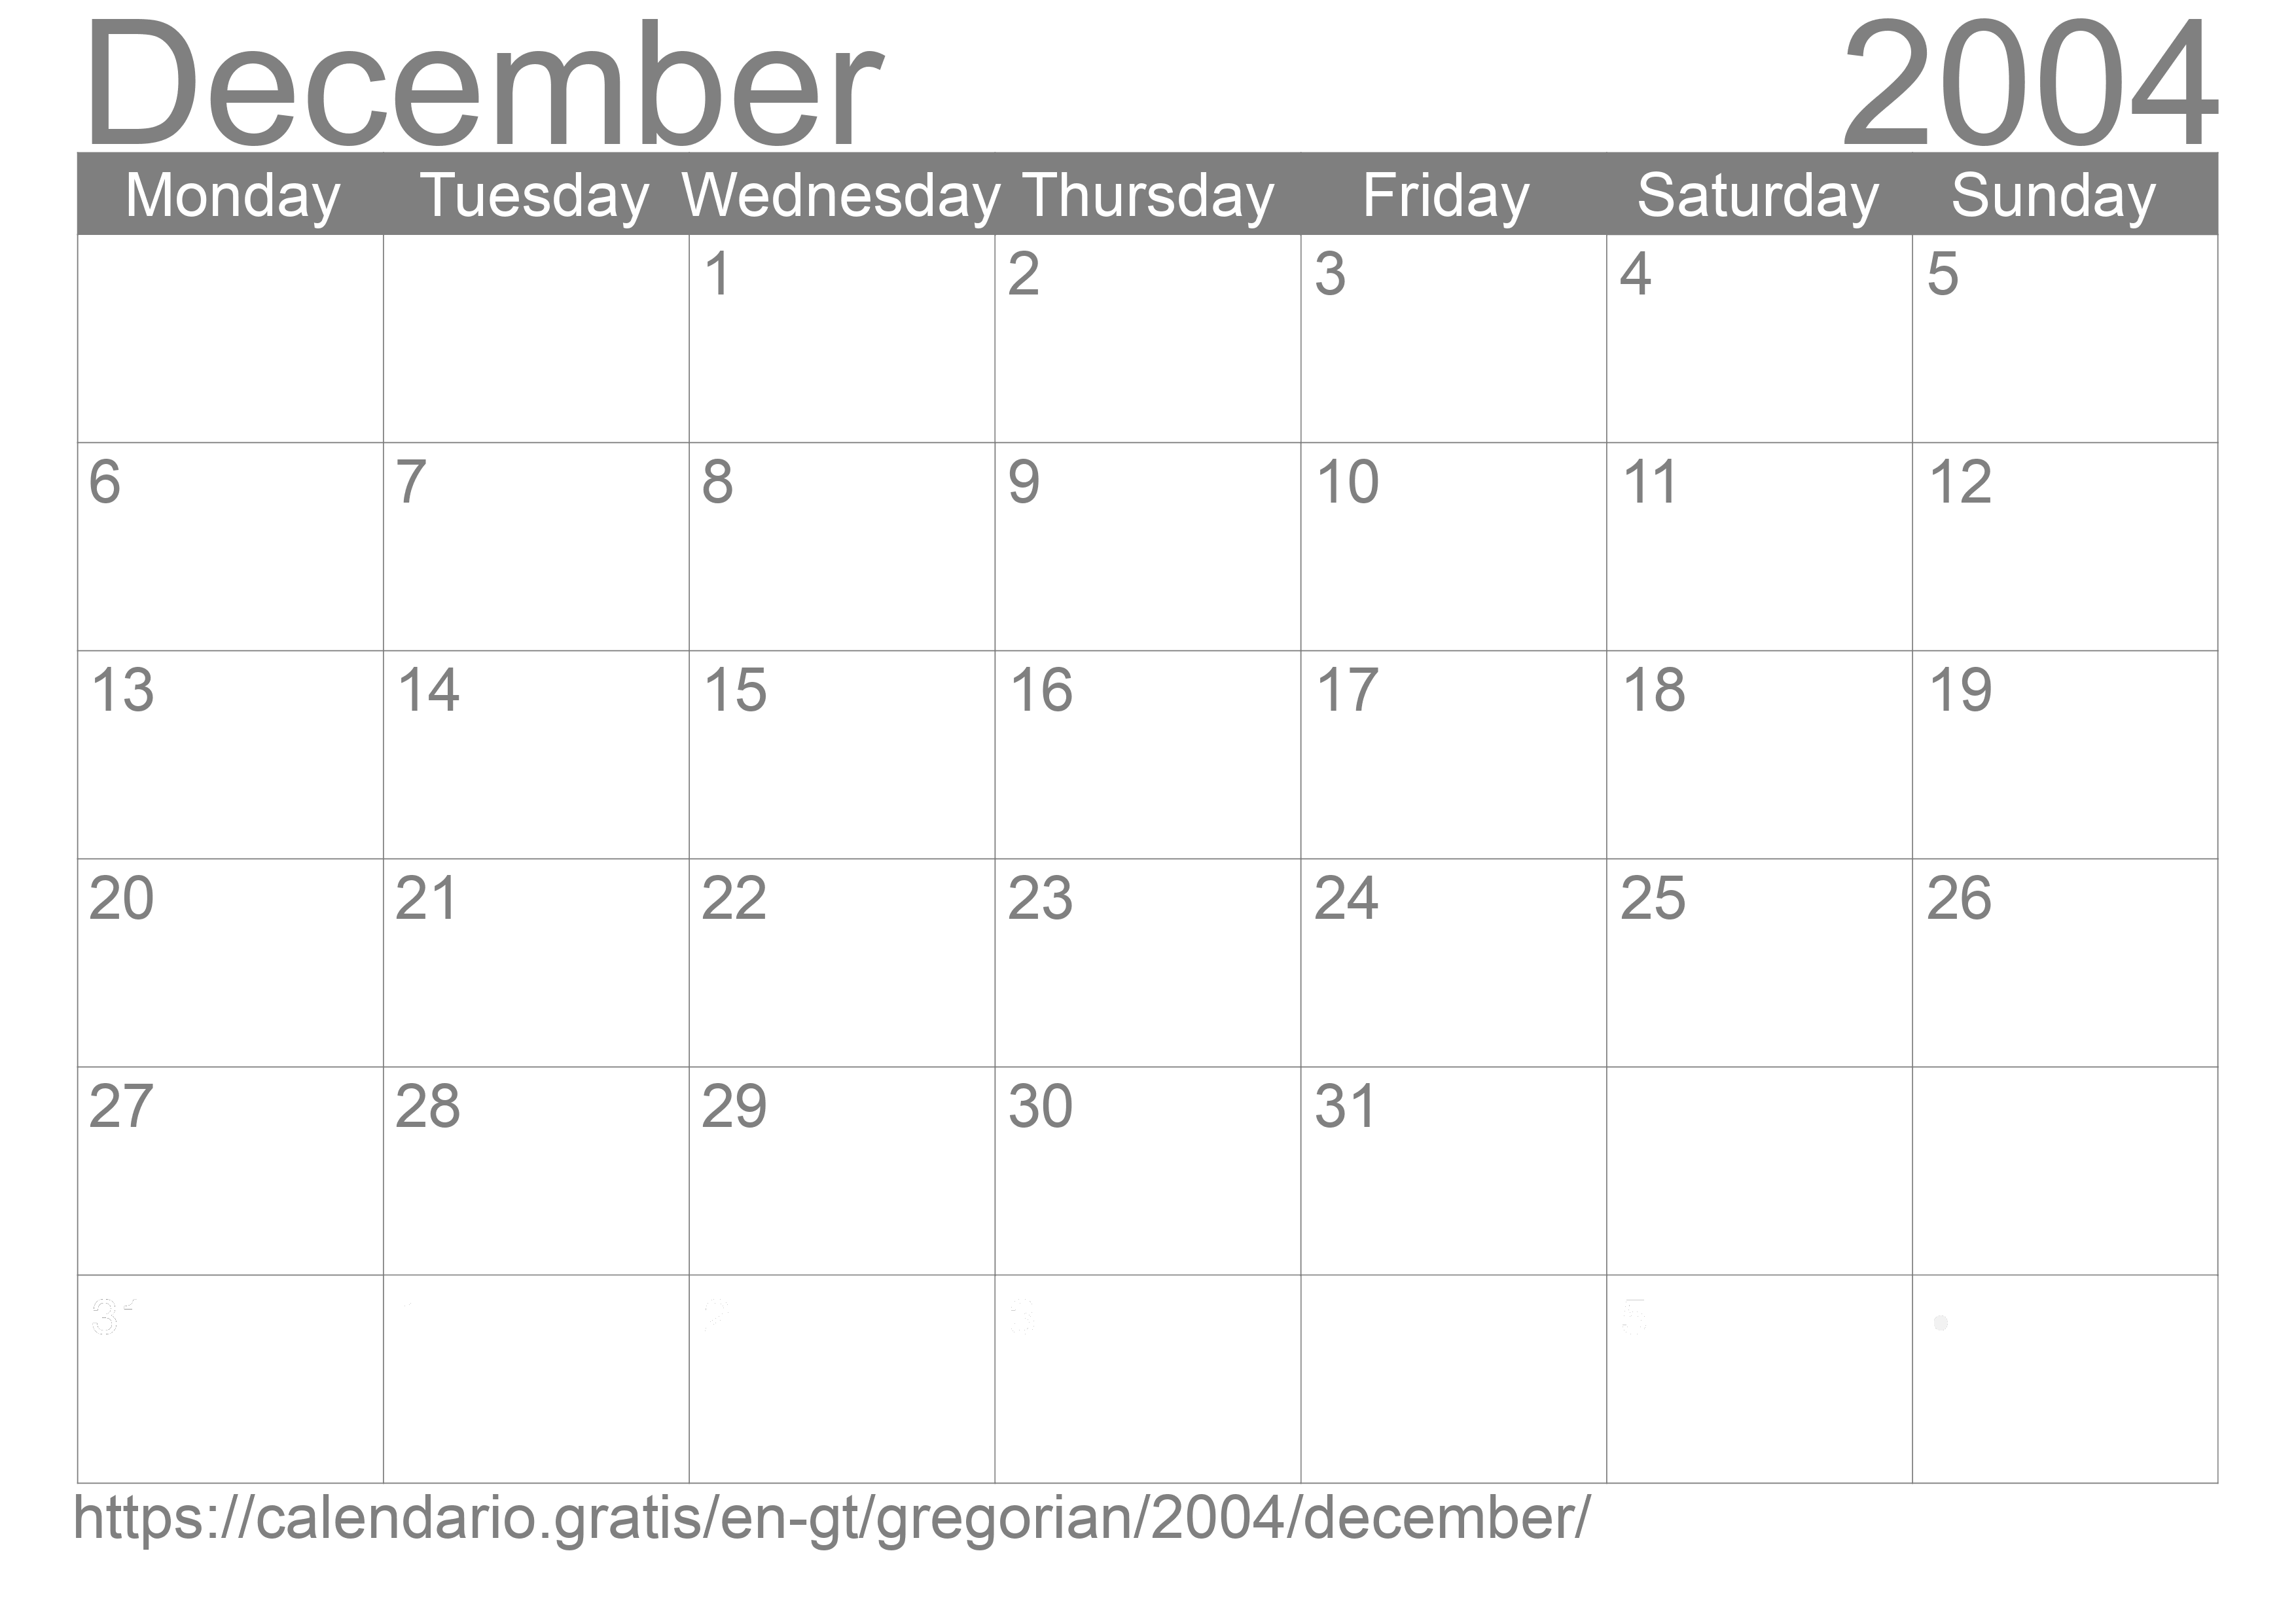 Calendar December 2004 to print